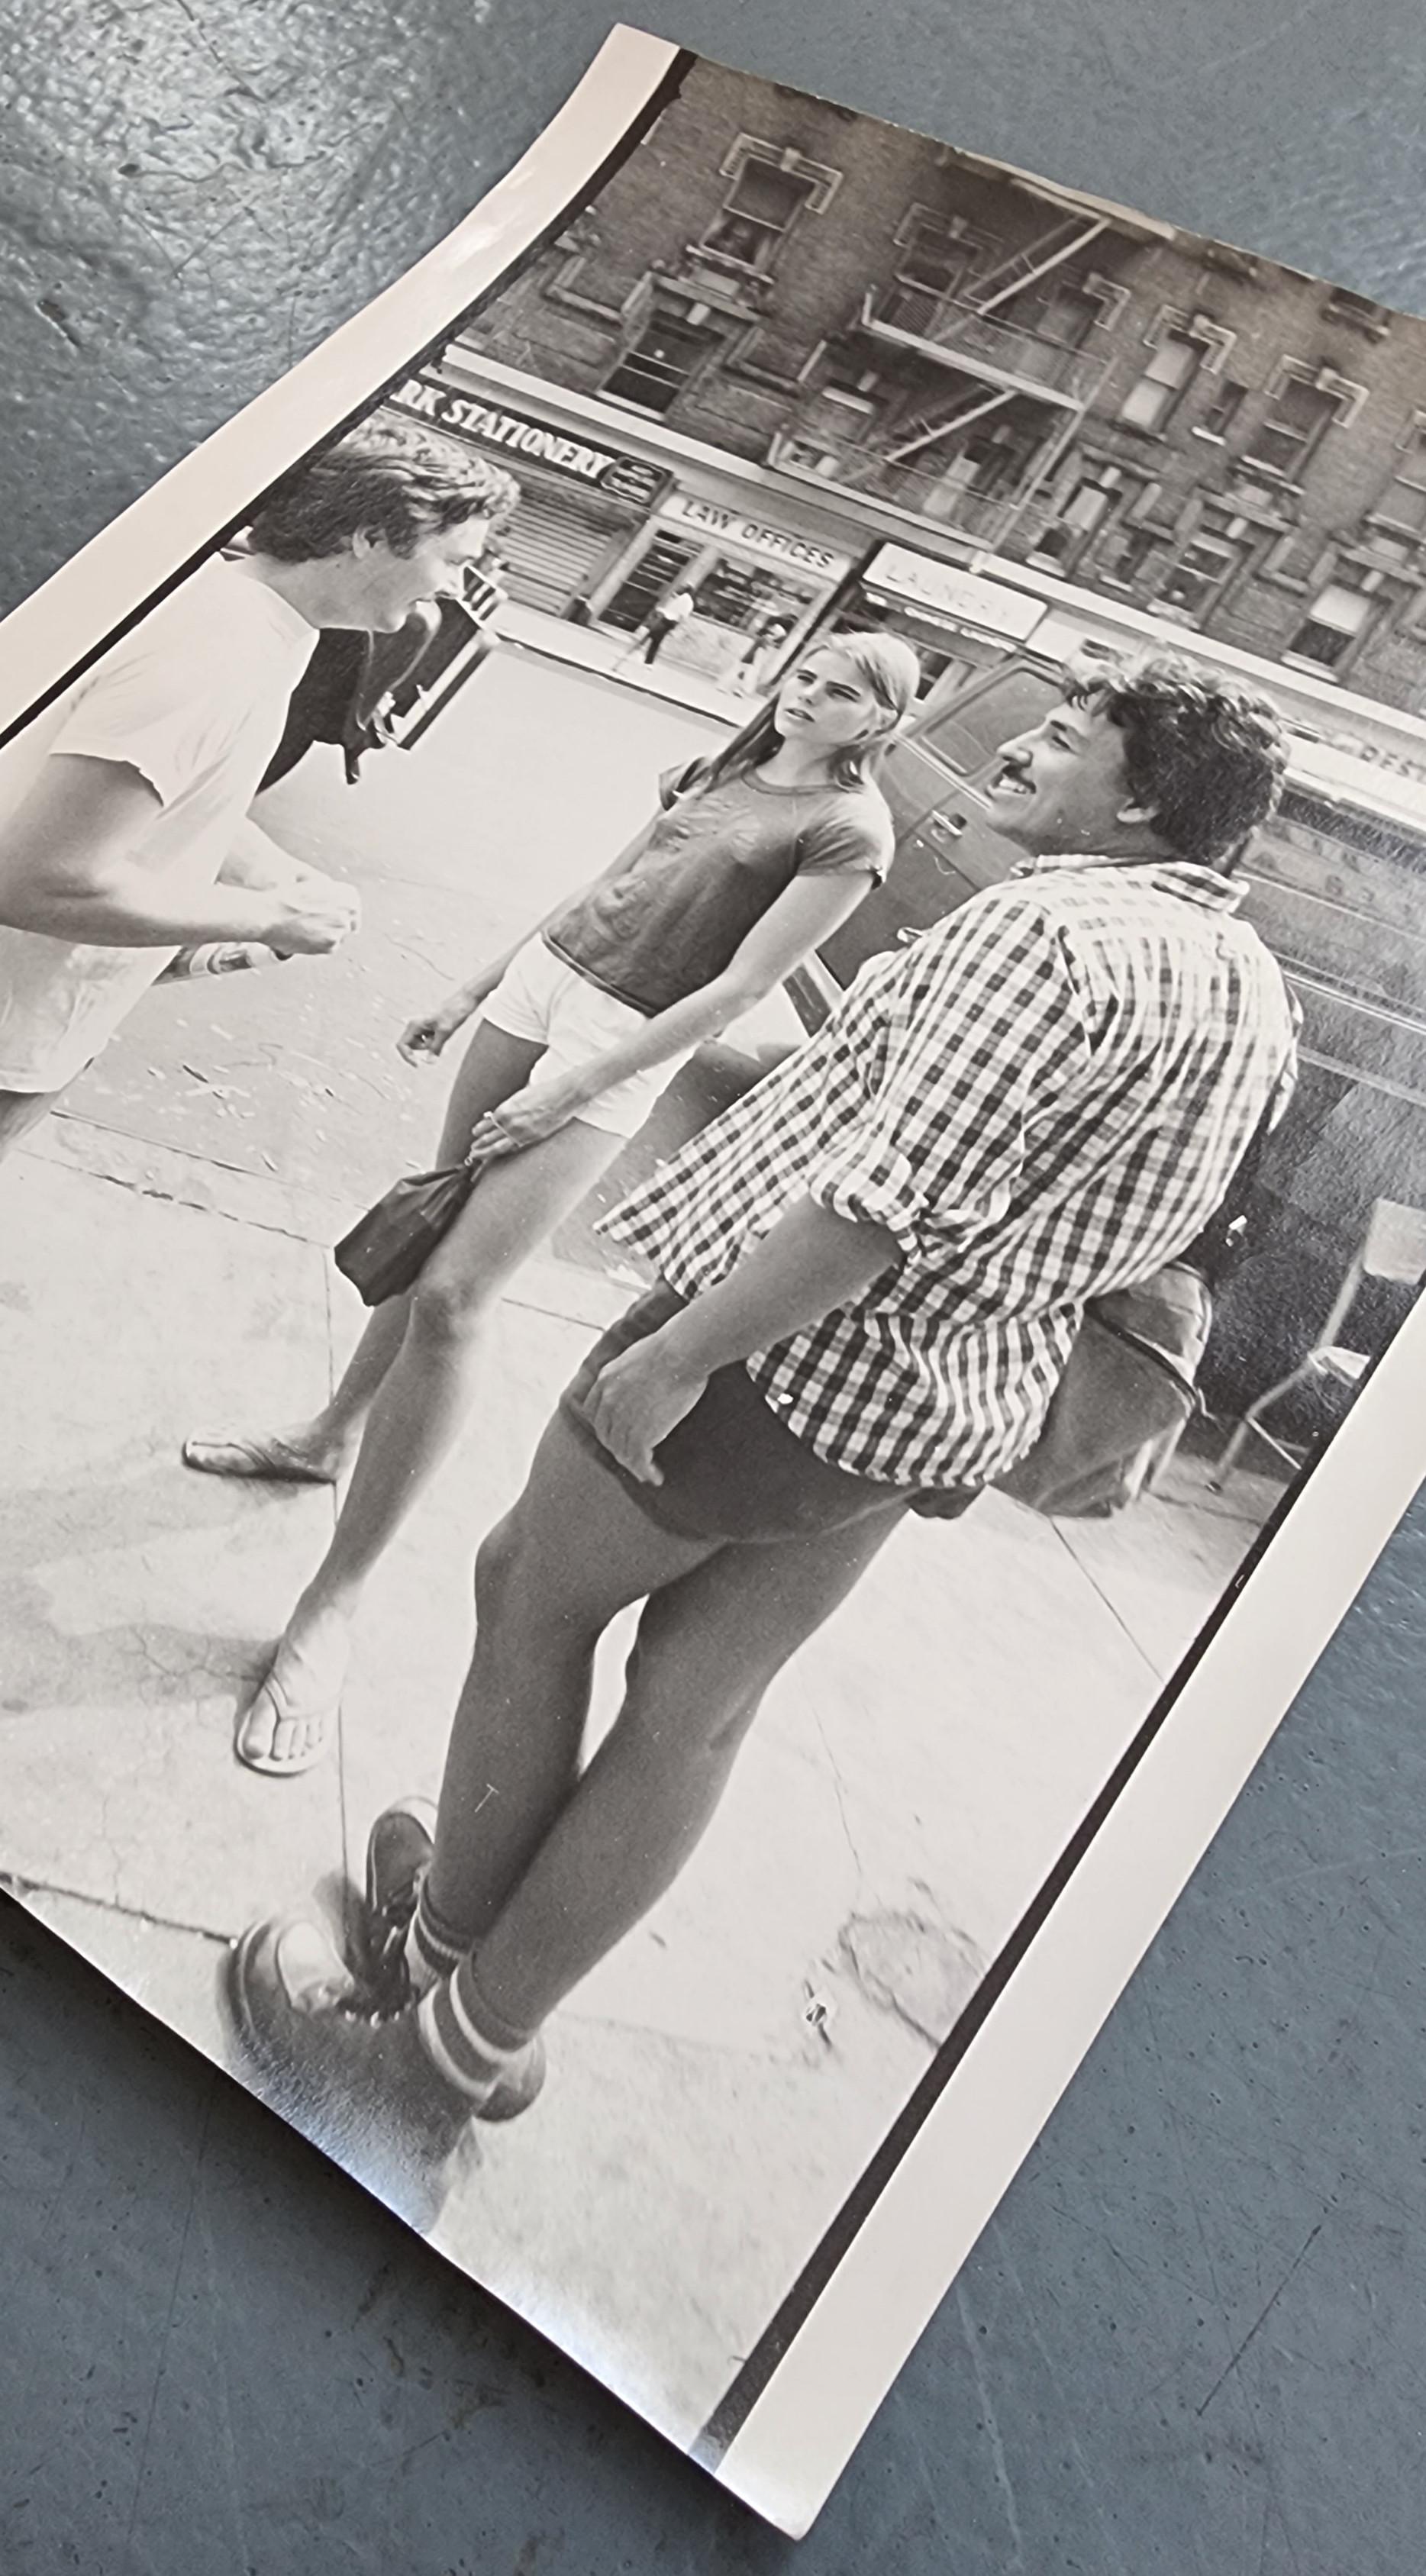 Joe Kelly
Mariel Hemingway
Black and White Photograph
Year: circa late 70s 
Image Size: 10x7in
Sheet Size: 10x8in
Unsigned
Ref.: 924802-1712

Tags: B&W, Black and White, Photography, Hemingway, Portrait, New York City, Iconic, 70s 

Joseph J. Kelly